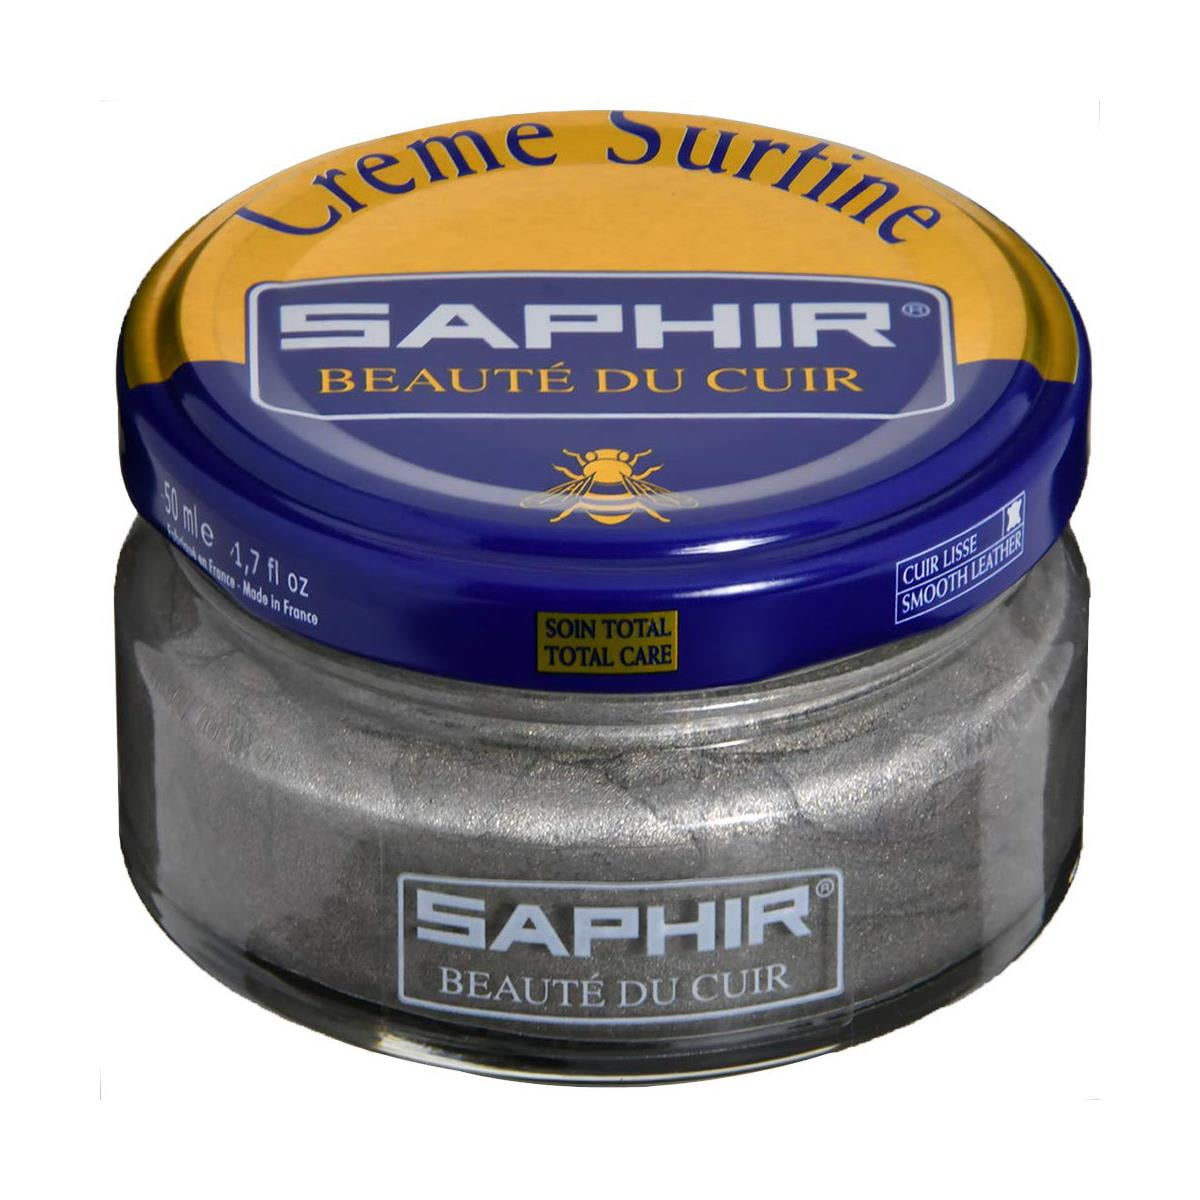 Saphir Beaute du Cuir Creme Surfine Shoe Polish 50ml Jar-08 Burgundy 